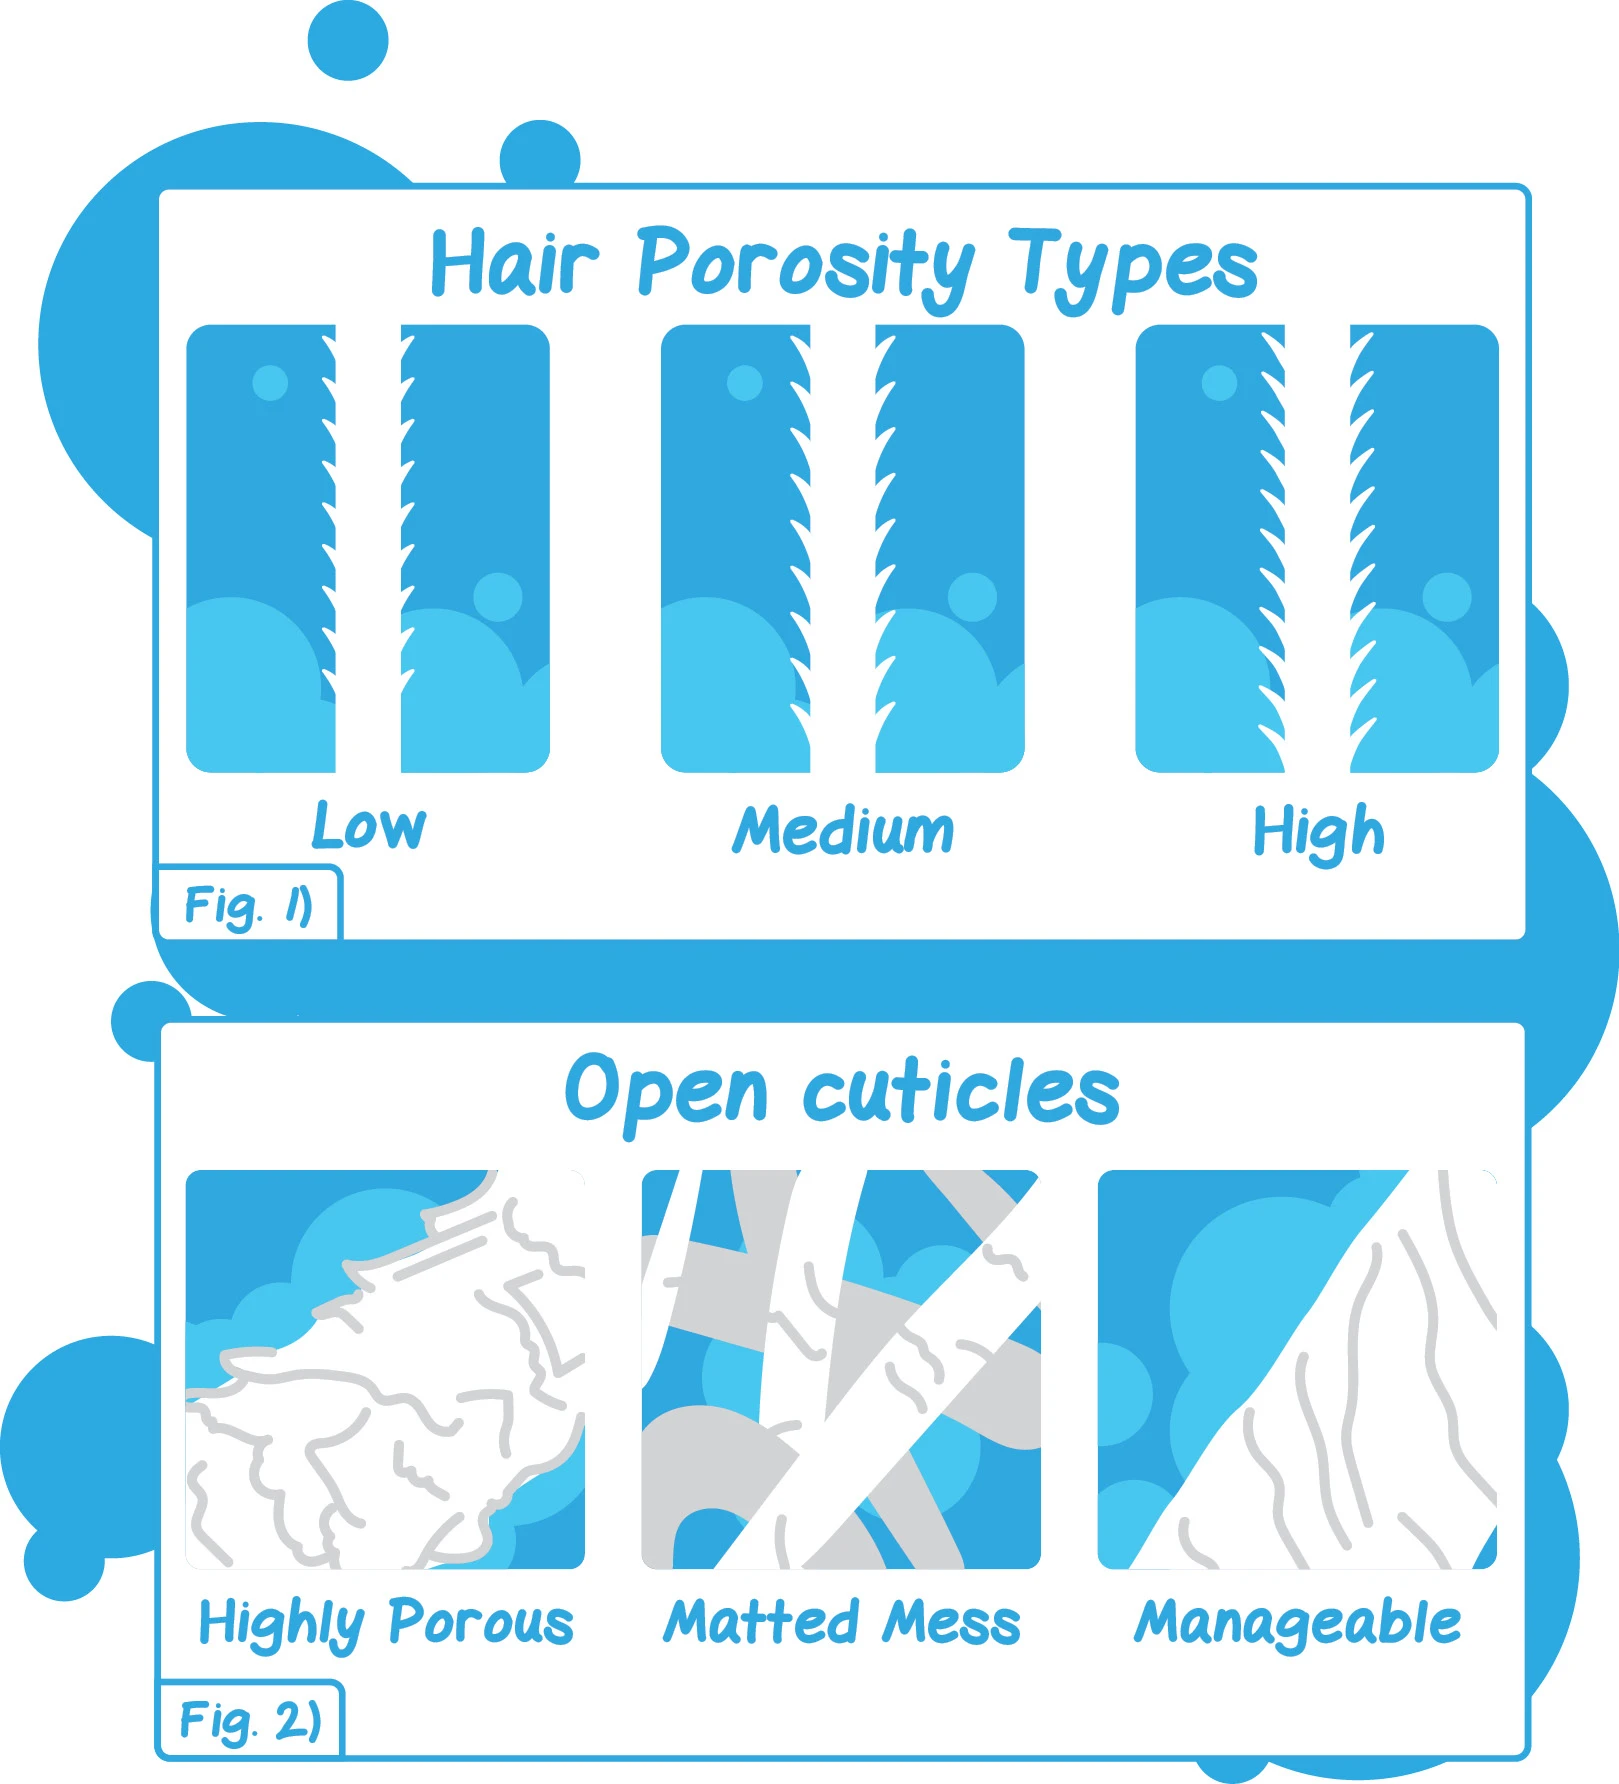 Figure 1: Hair Porosity Types / Figure 2: Open cuticles